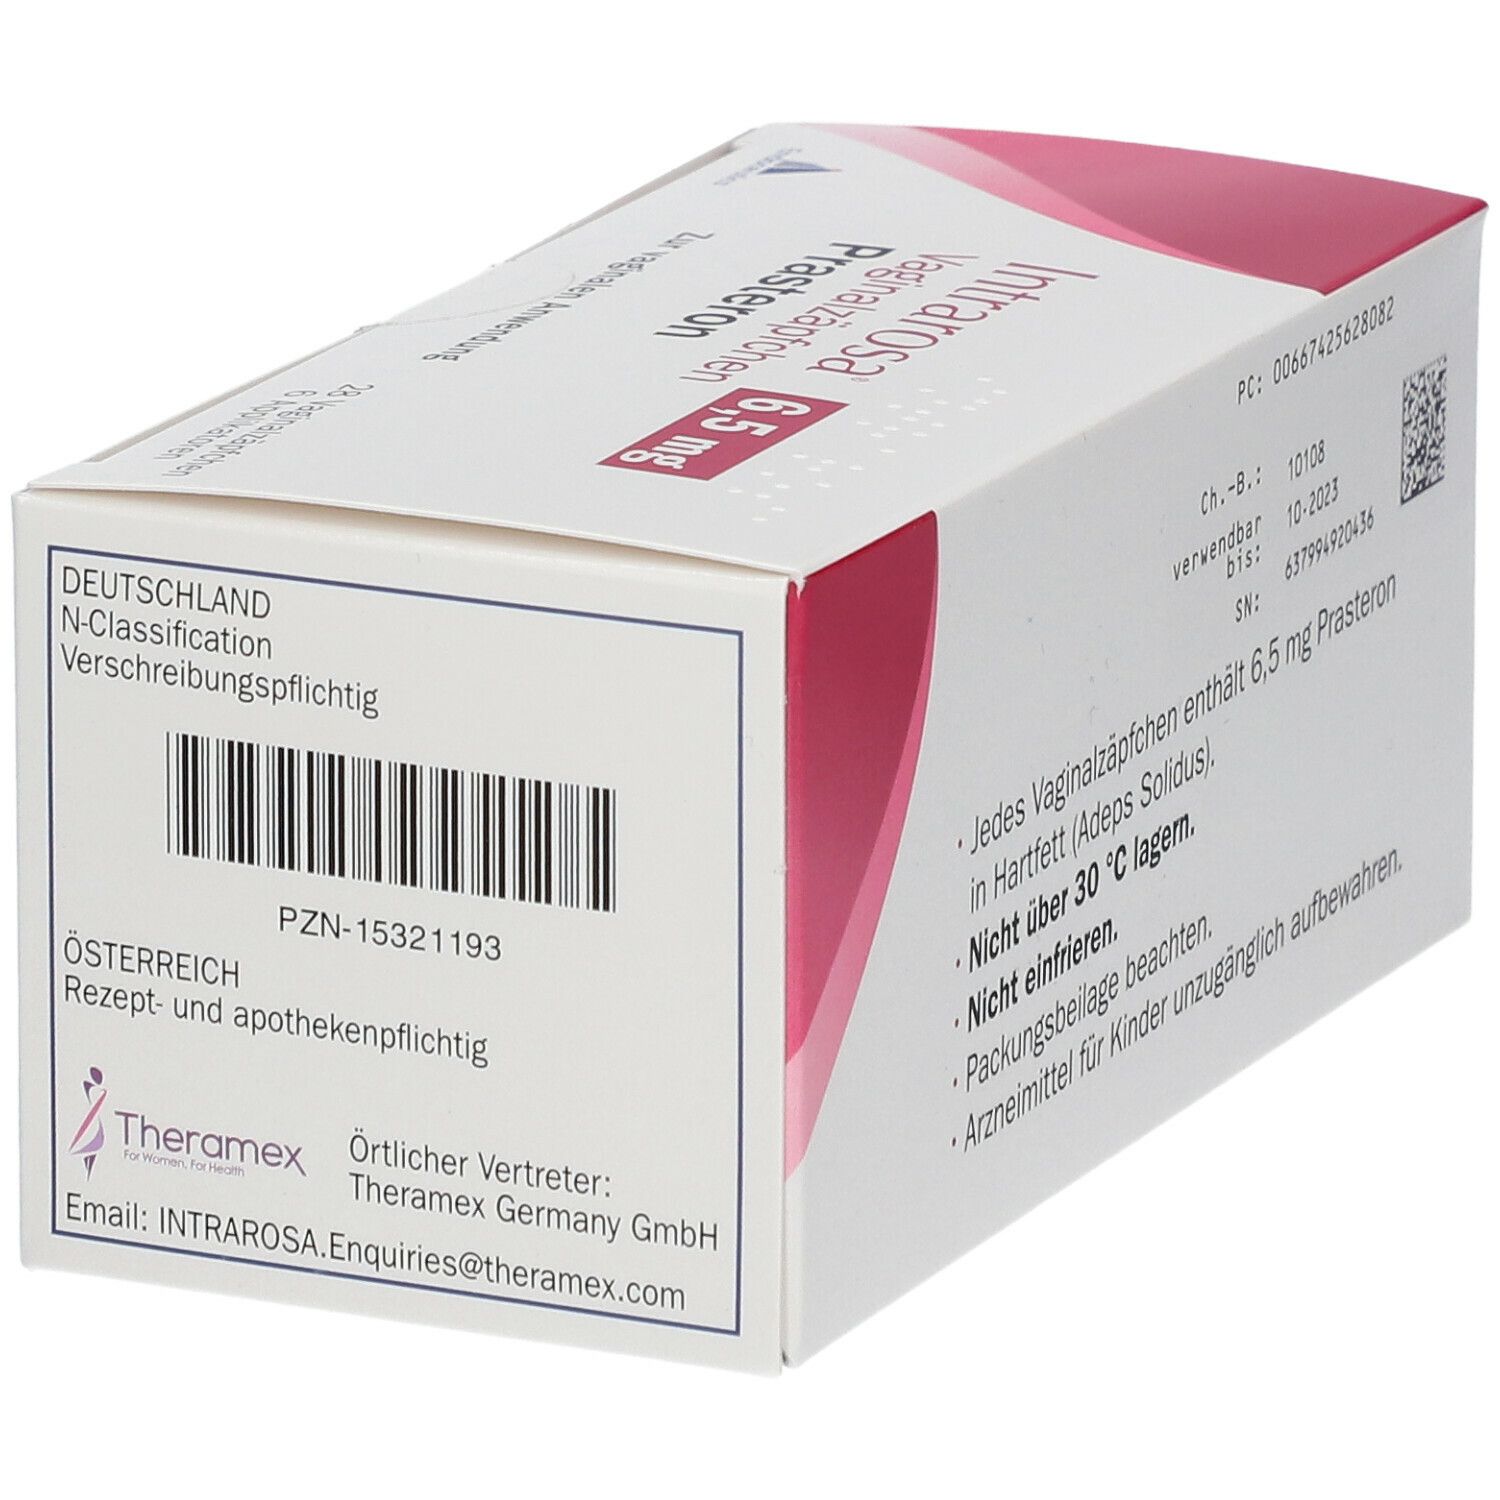 Intrarosa® 6,5 mg